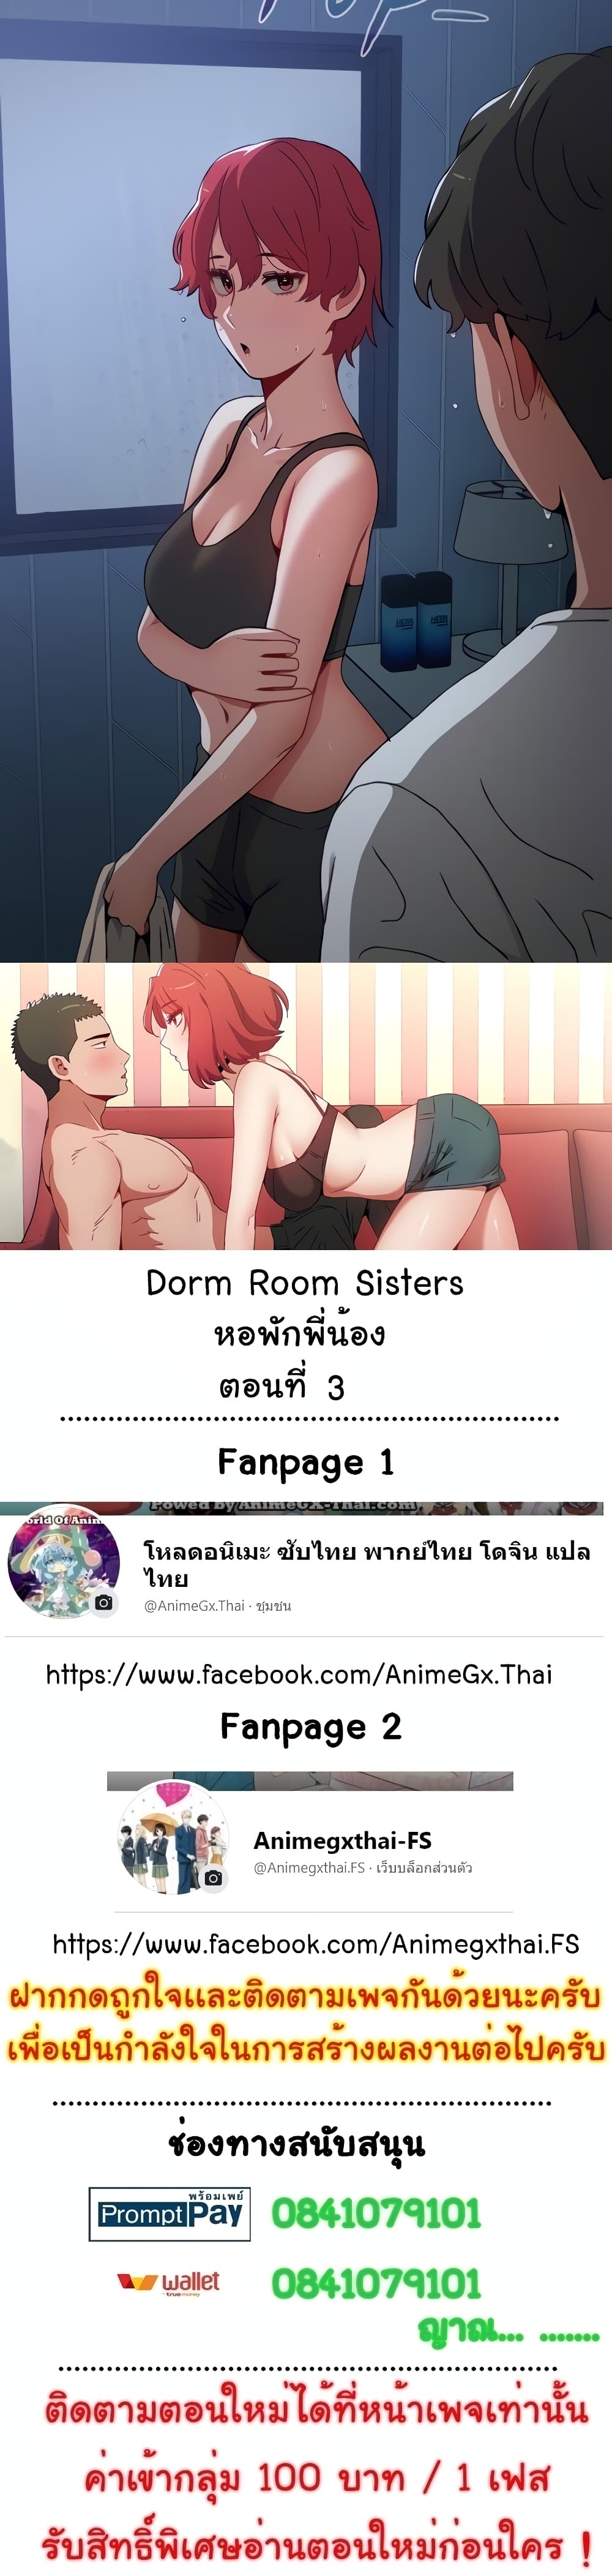 Dorm Room Sisters 3 01